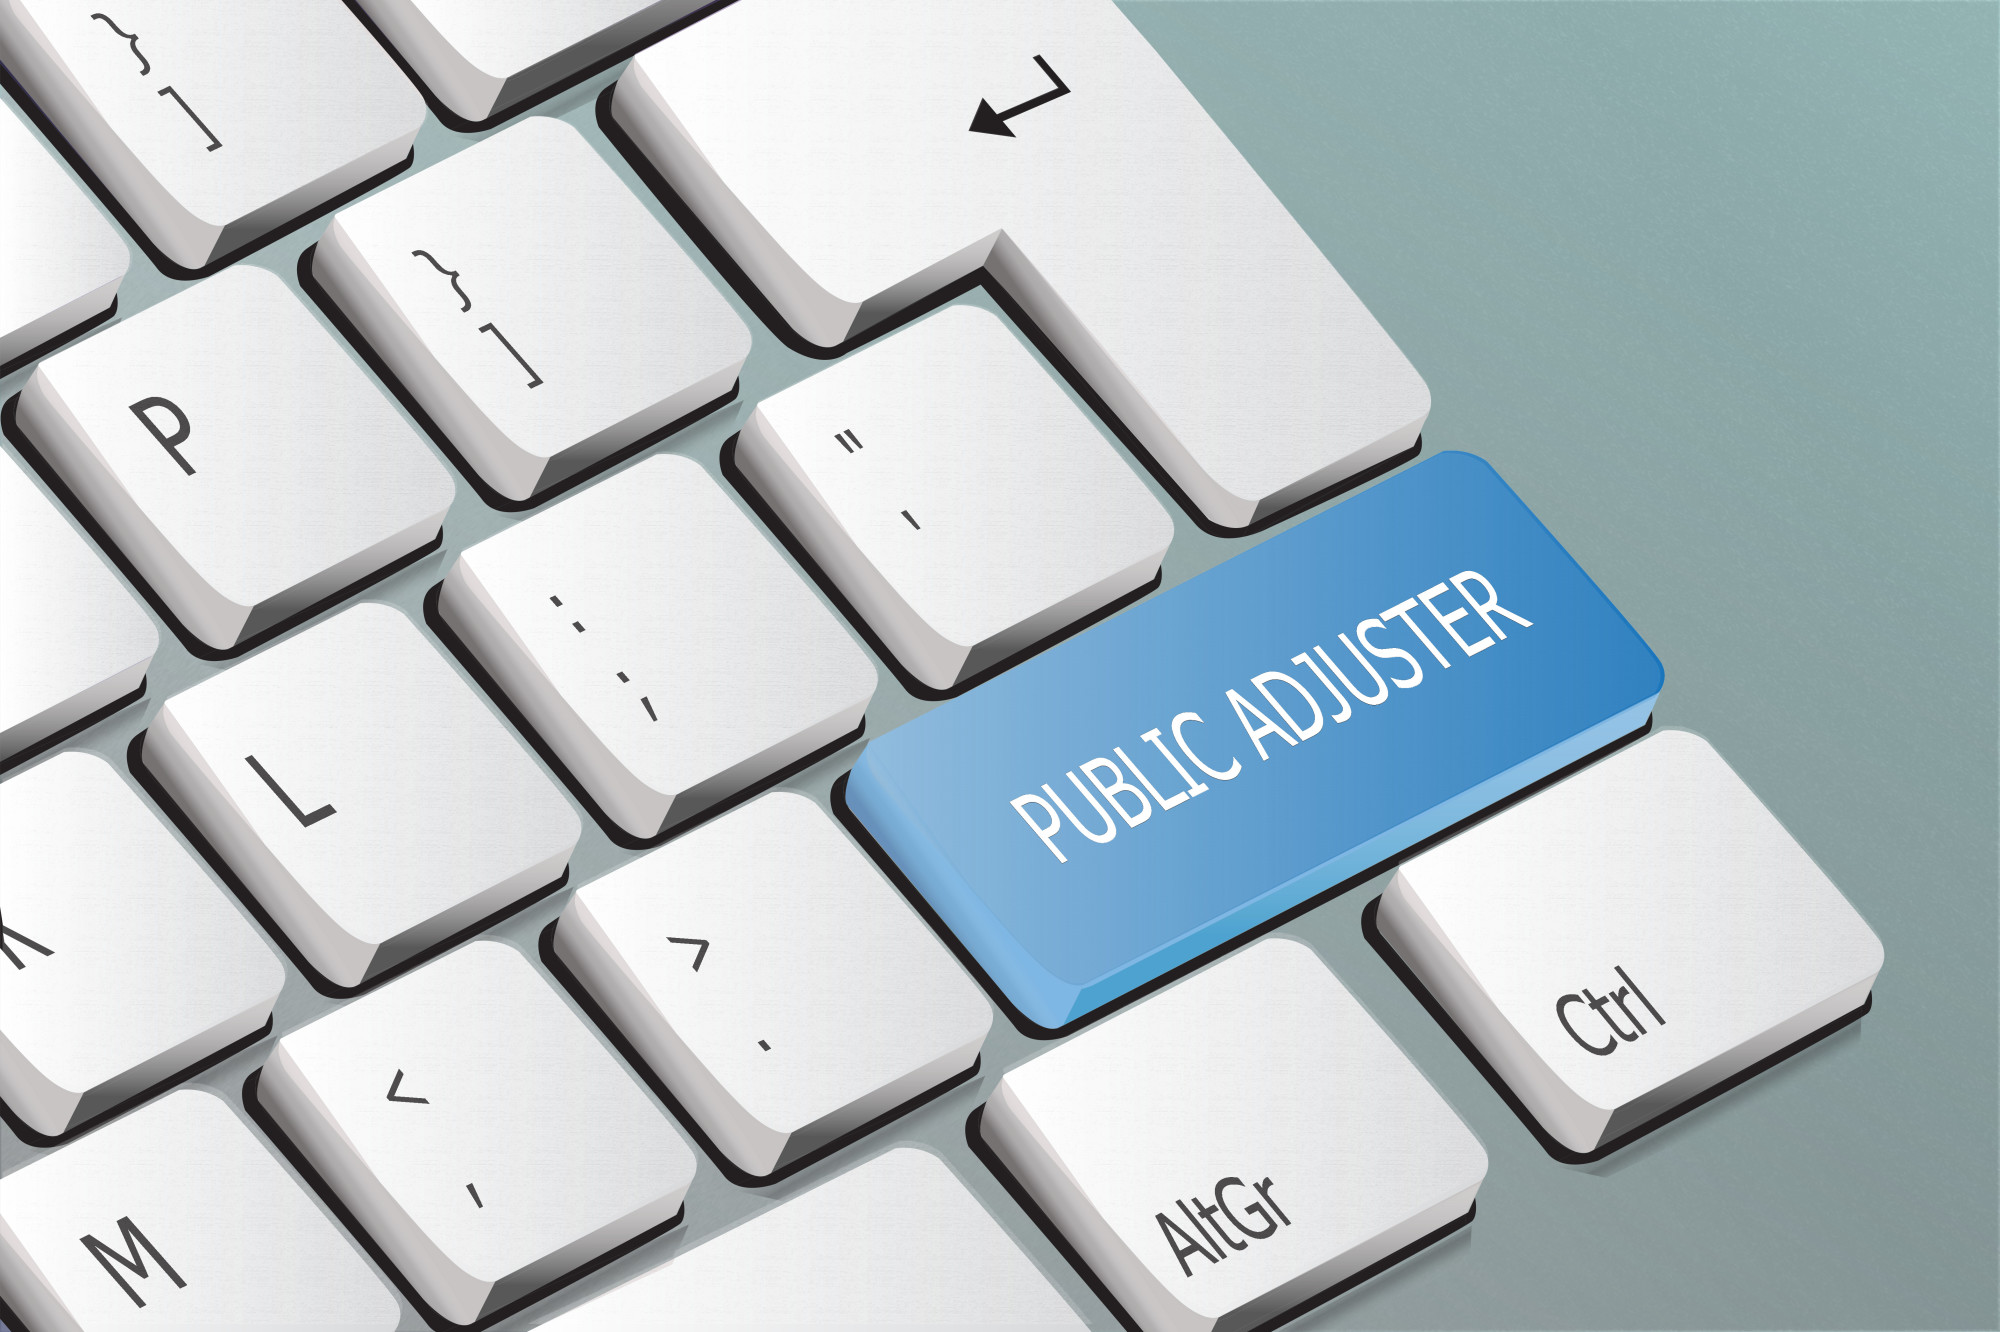 public adjuster button on keyboard